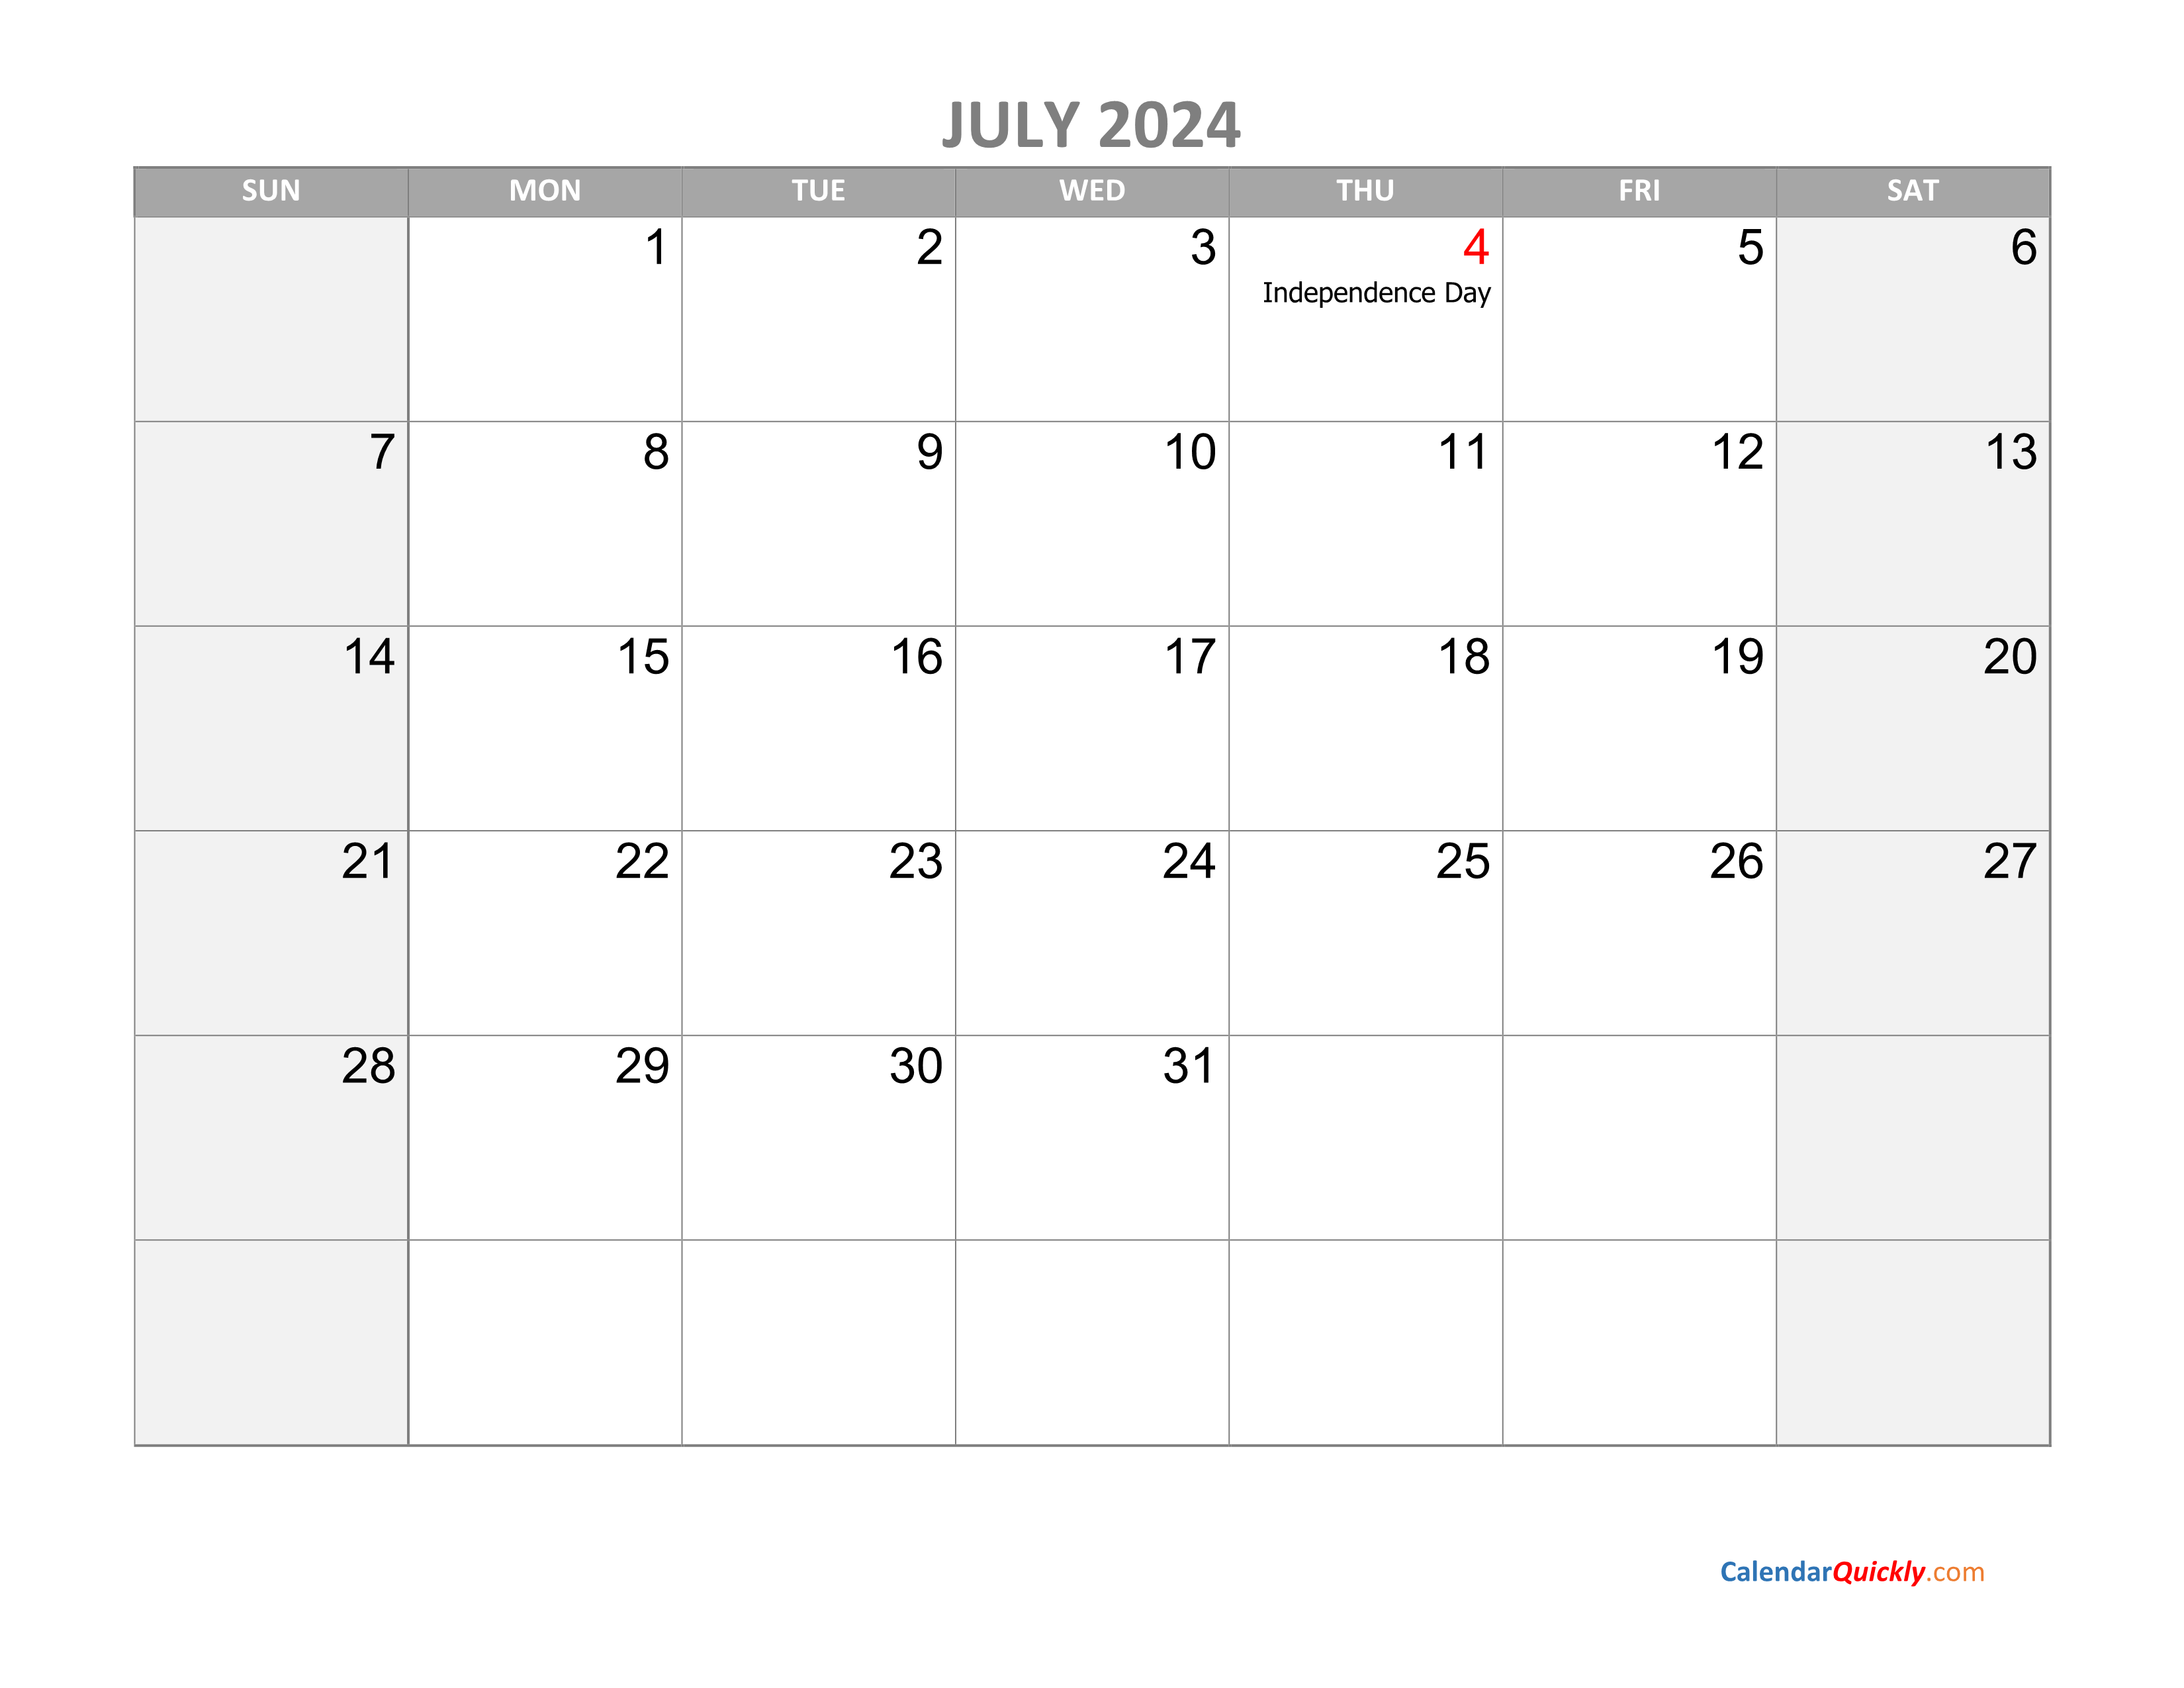 July Calendar 2024 with Holidays Calendar Quickly